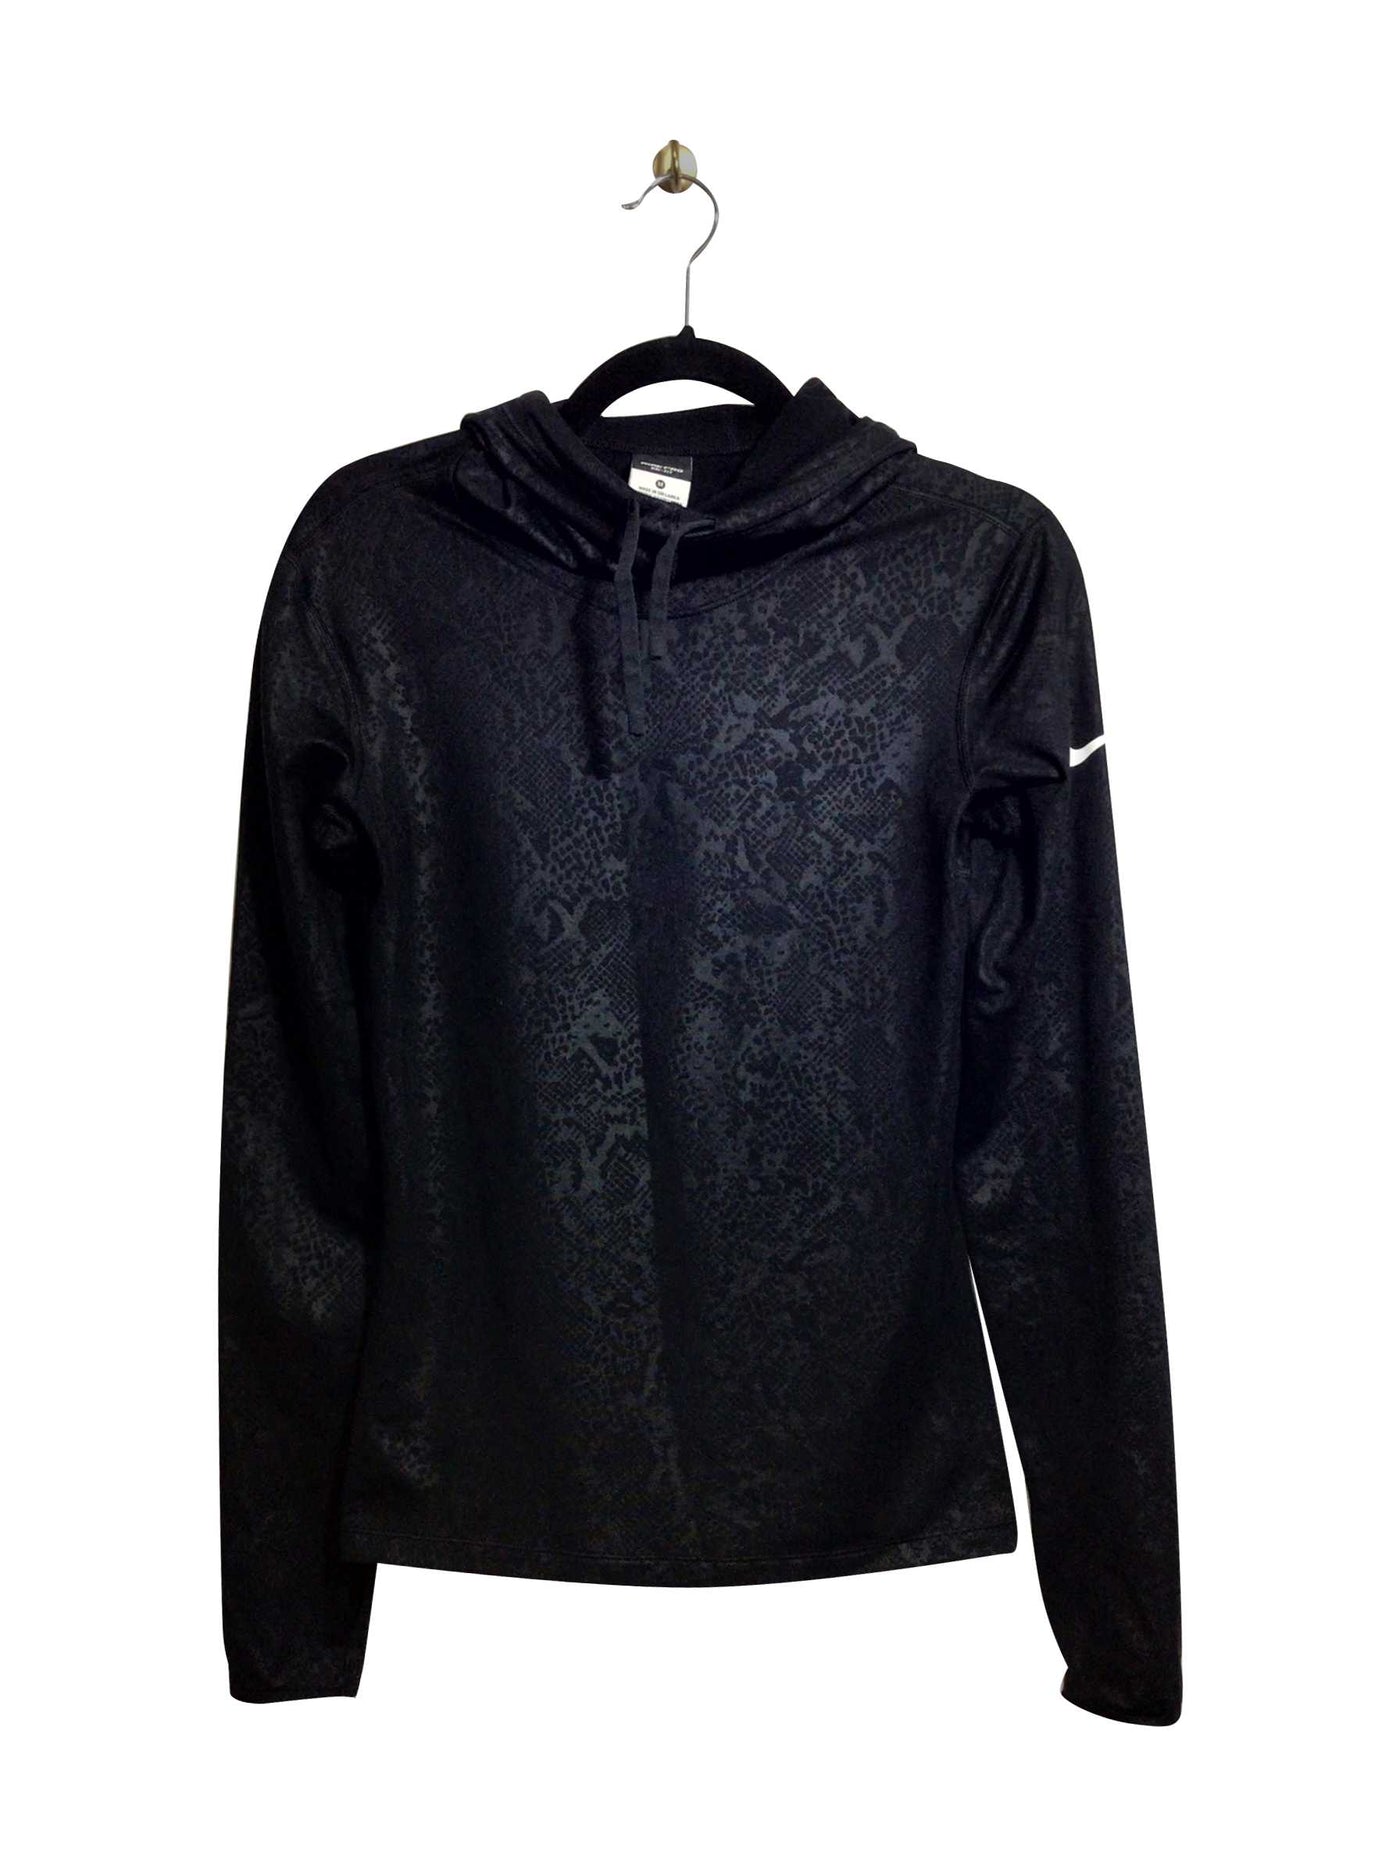 NIKE Regular fit Activewear Jacket in Black - Size M | 16.5 $ KOOP